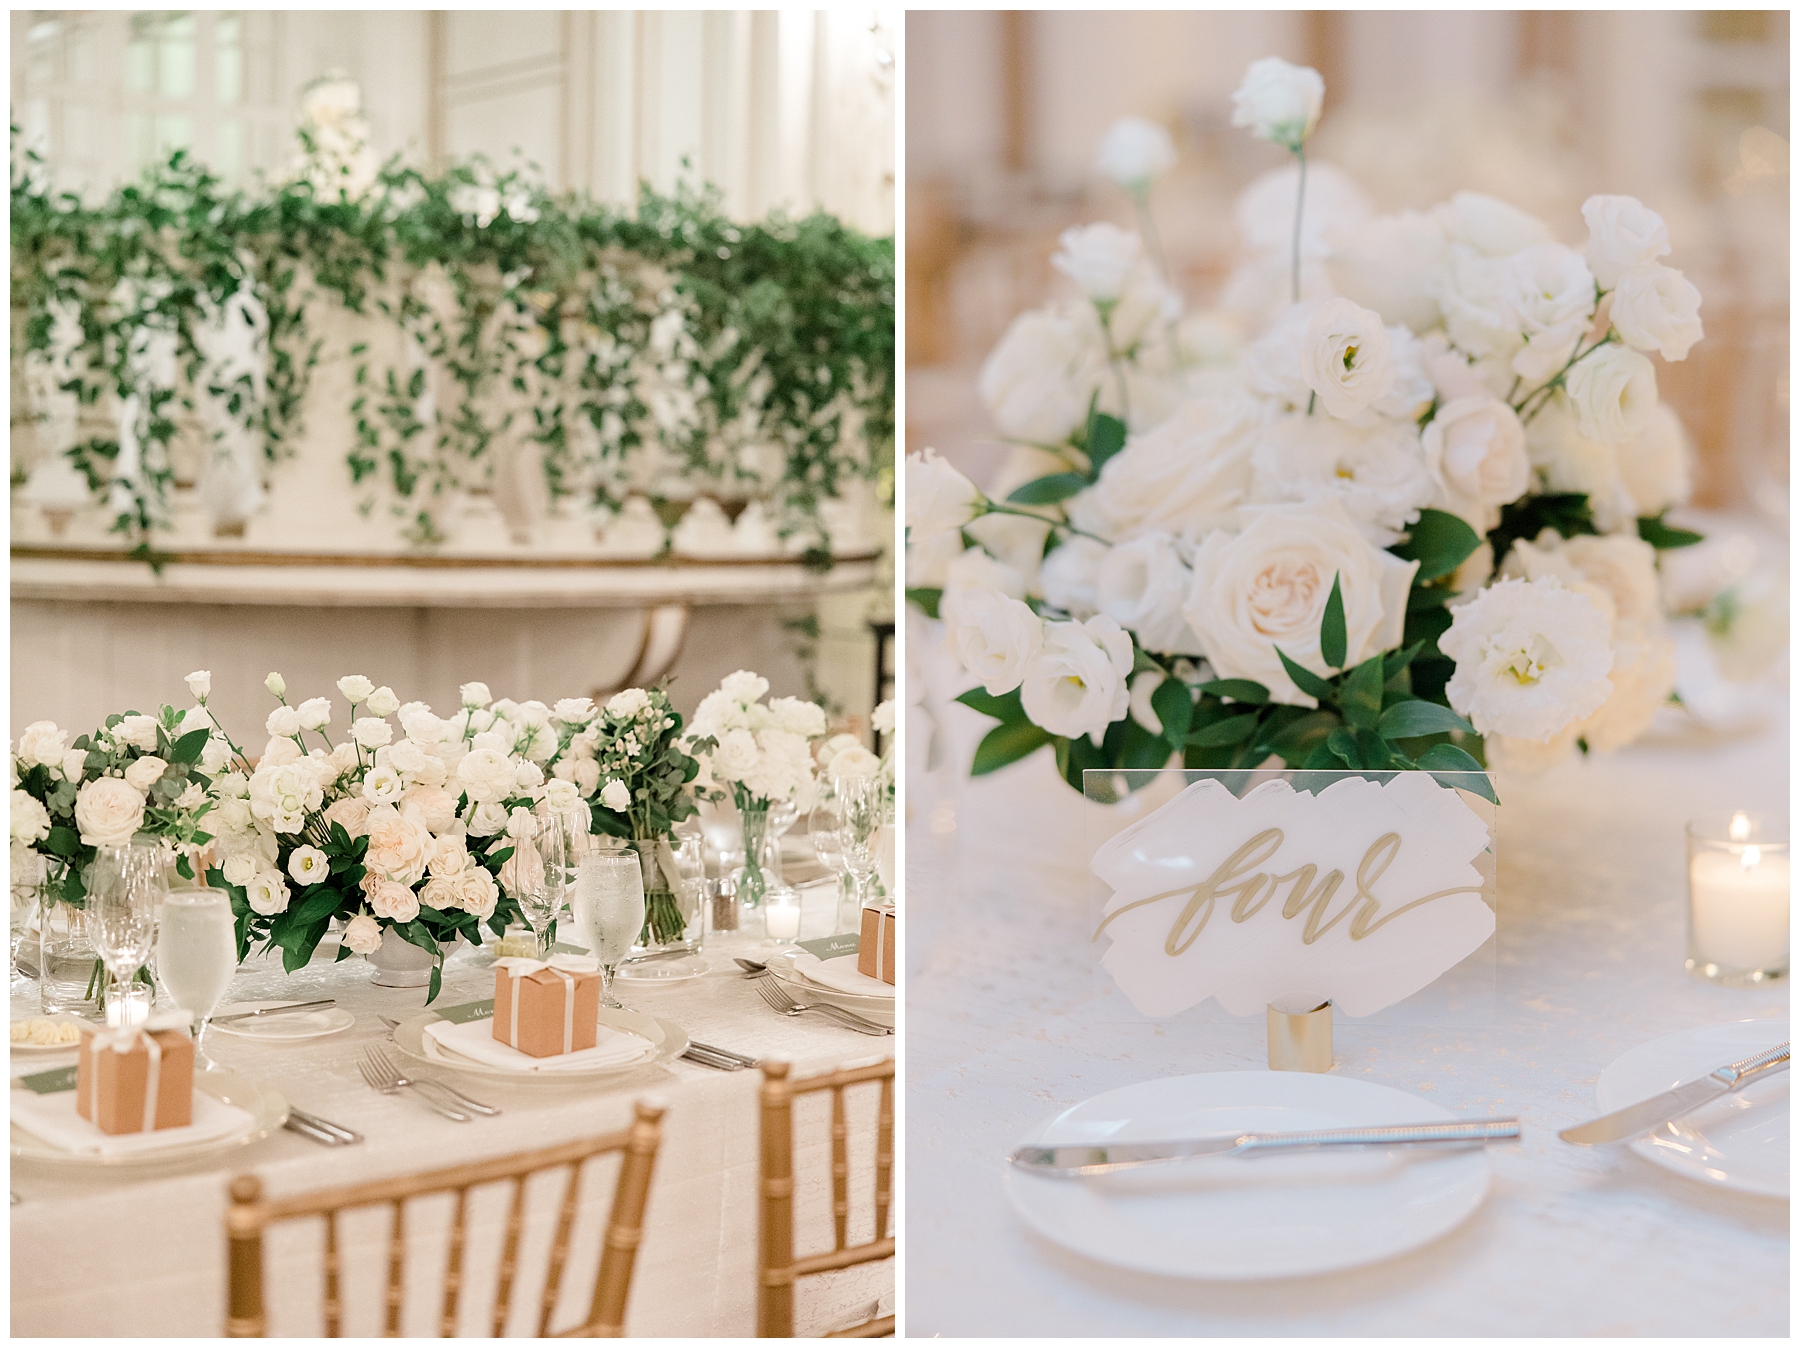 timeless floral arrangements decorate Luxury Boston Wedding at Fairmont Copley Plaza